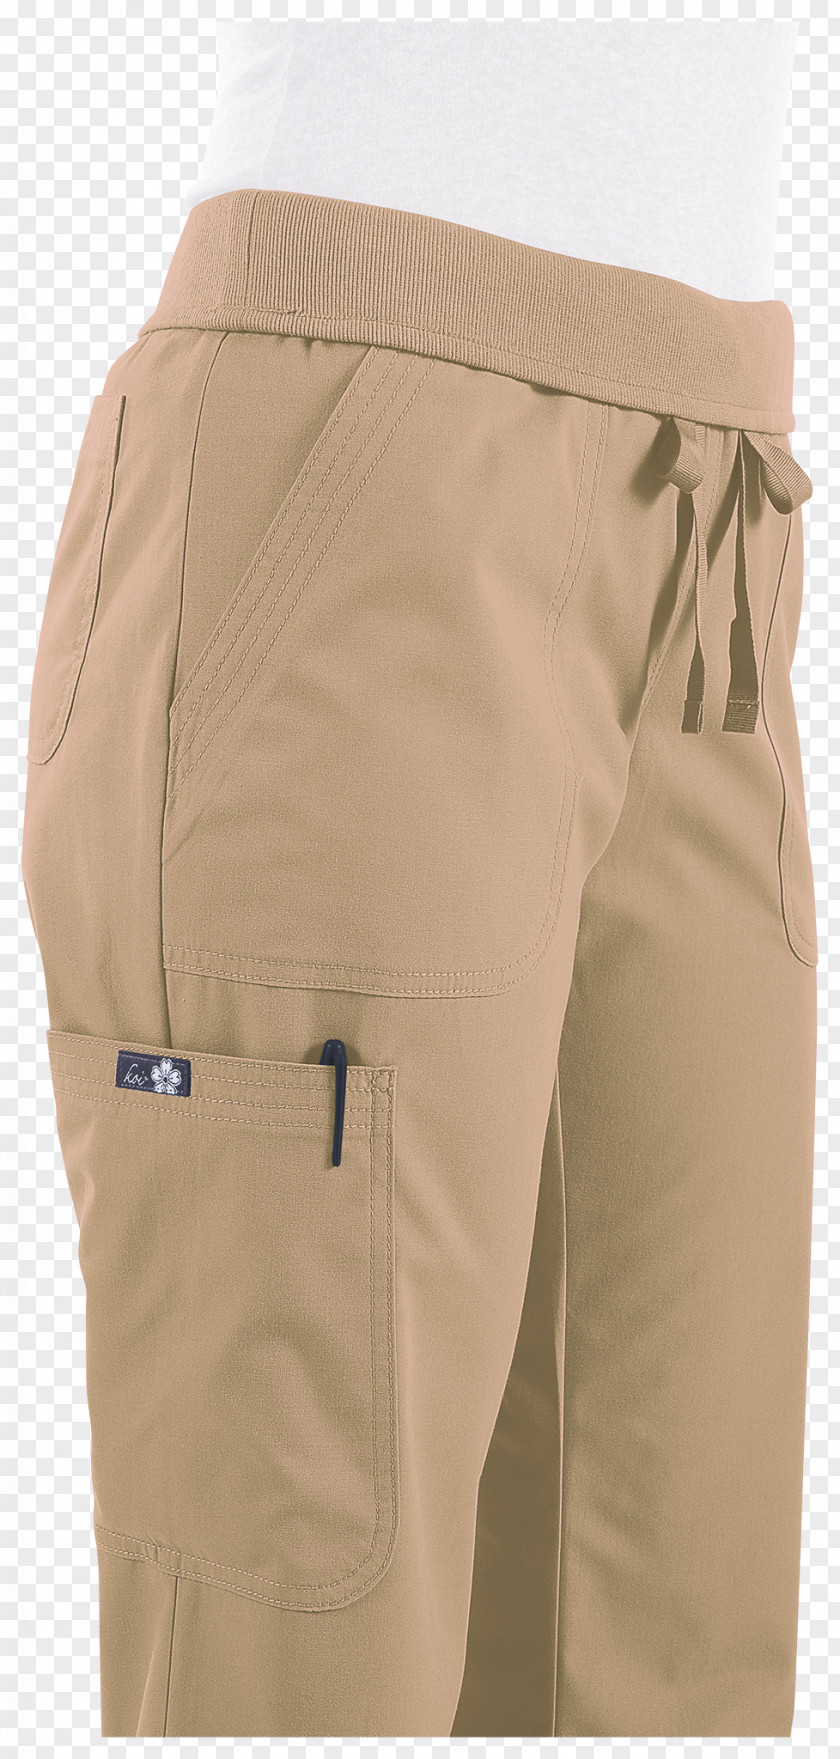 Koi Bermuda Shorts Waist Pants Khaki PNG